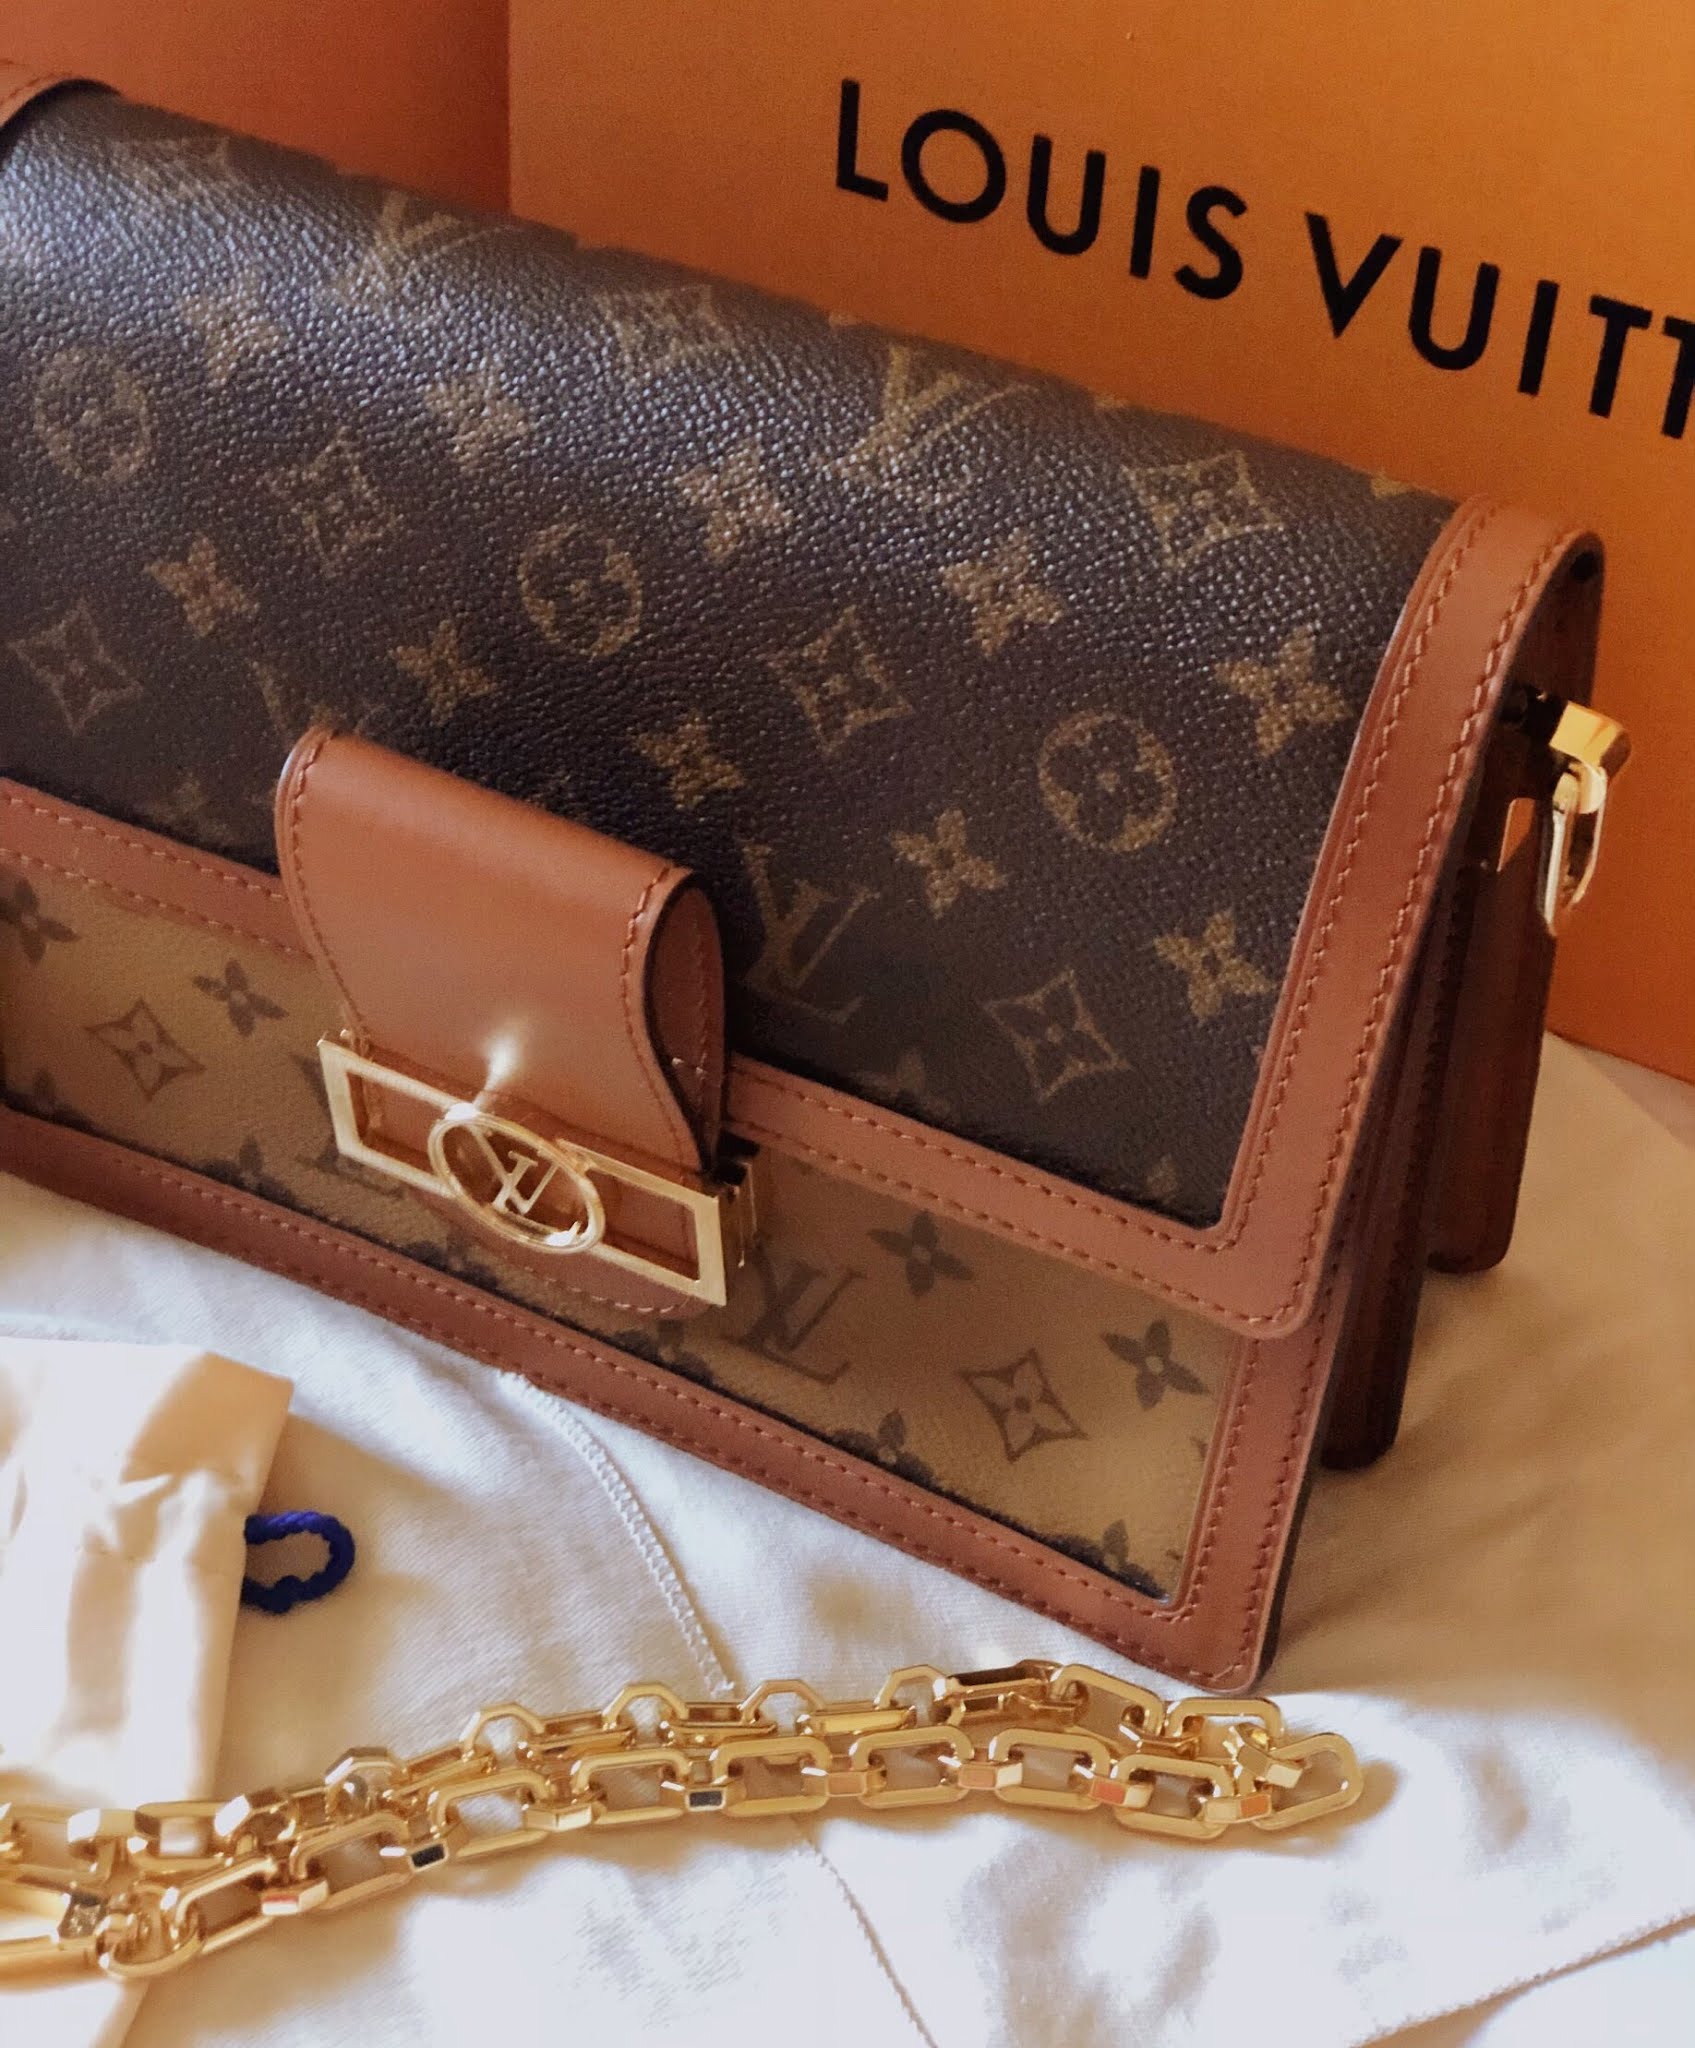 Louis Vuitton Dauphine MM handbag unboxing